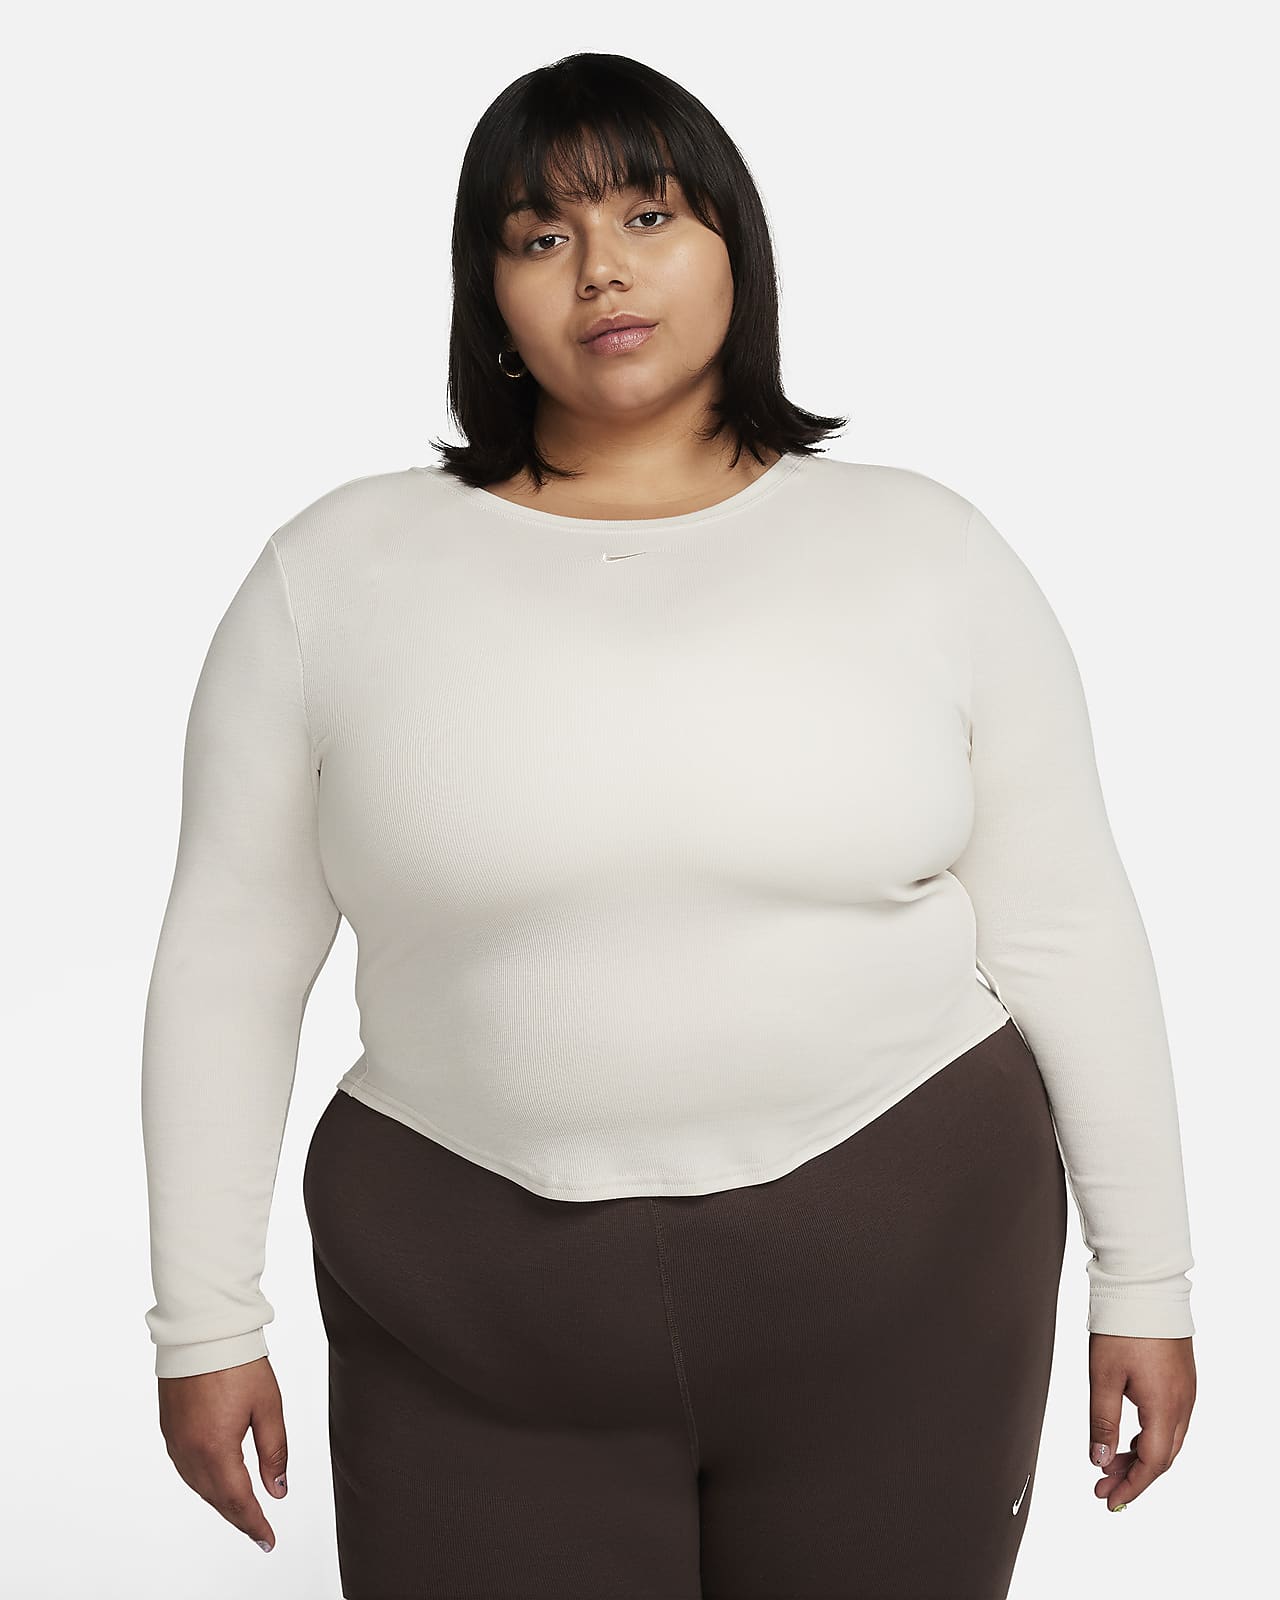 Playera de manga larga de tela de minicanalé ajustada con espalda redonda para mujer (talla grande) Nike Sportswear Chill Knit